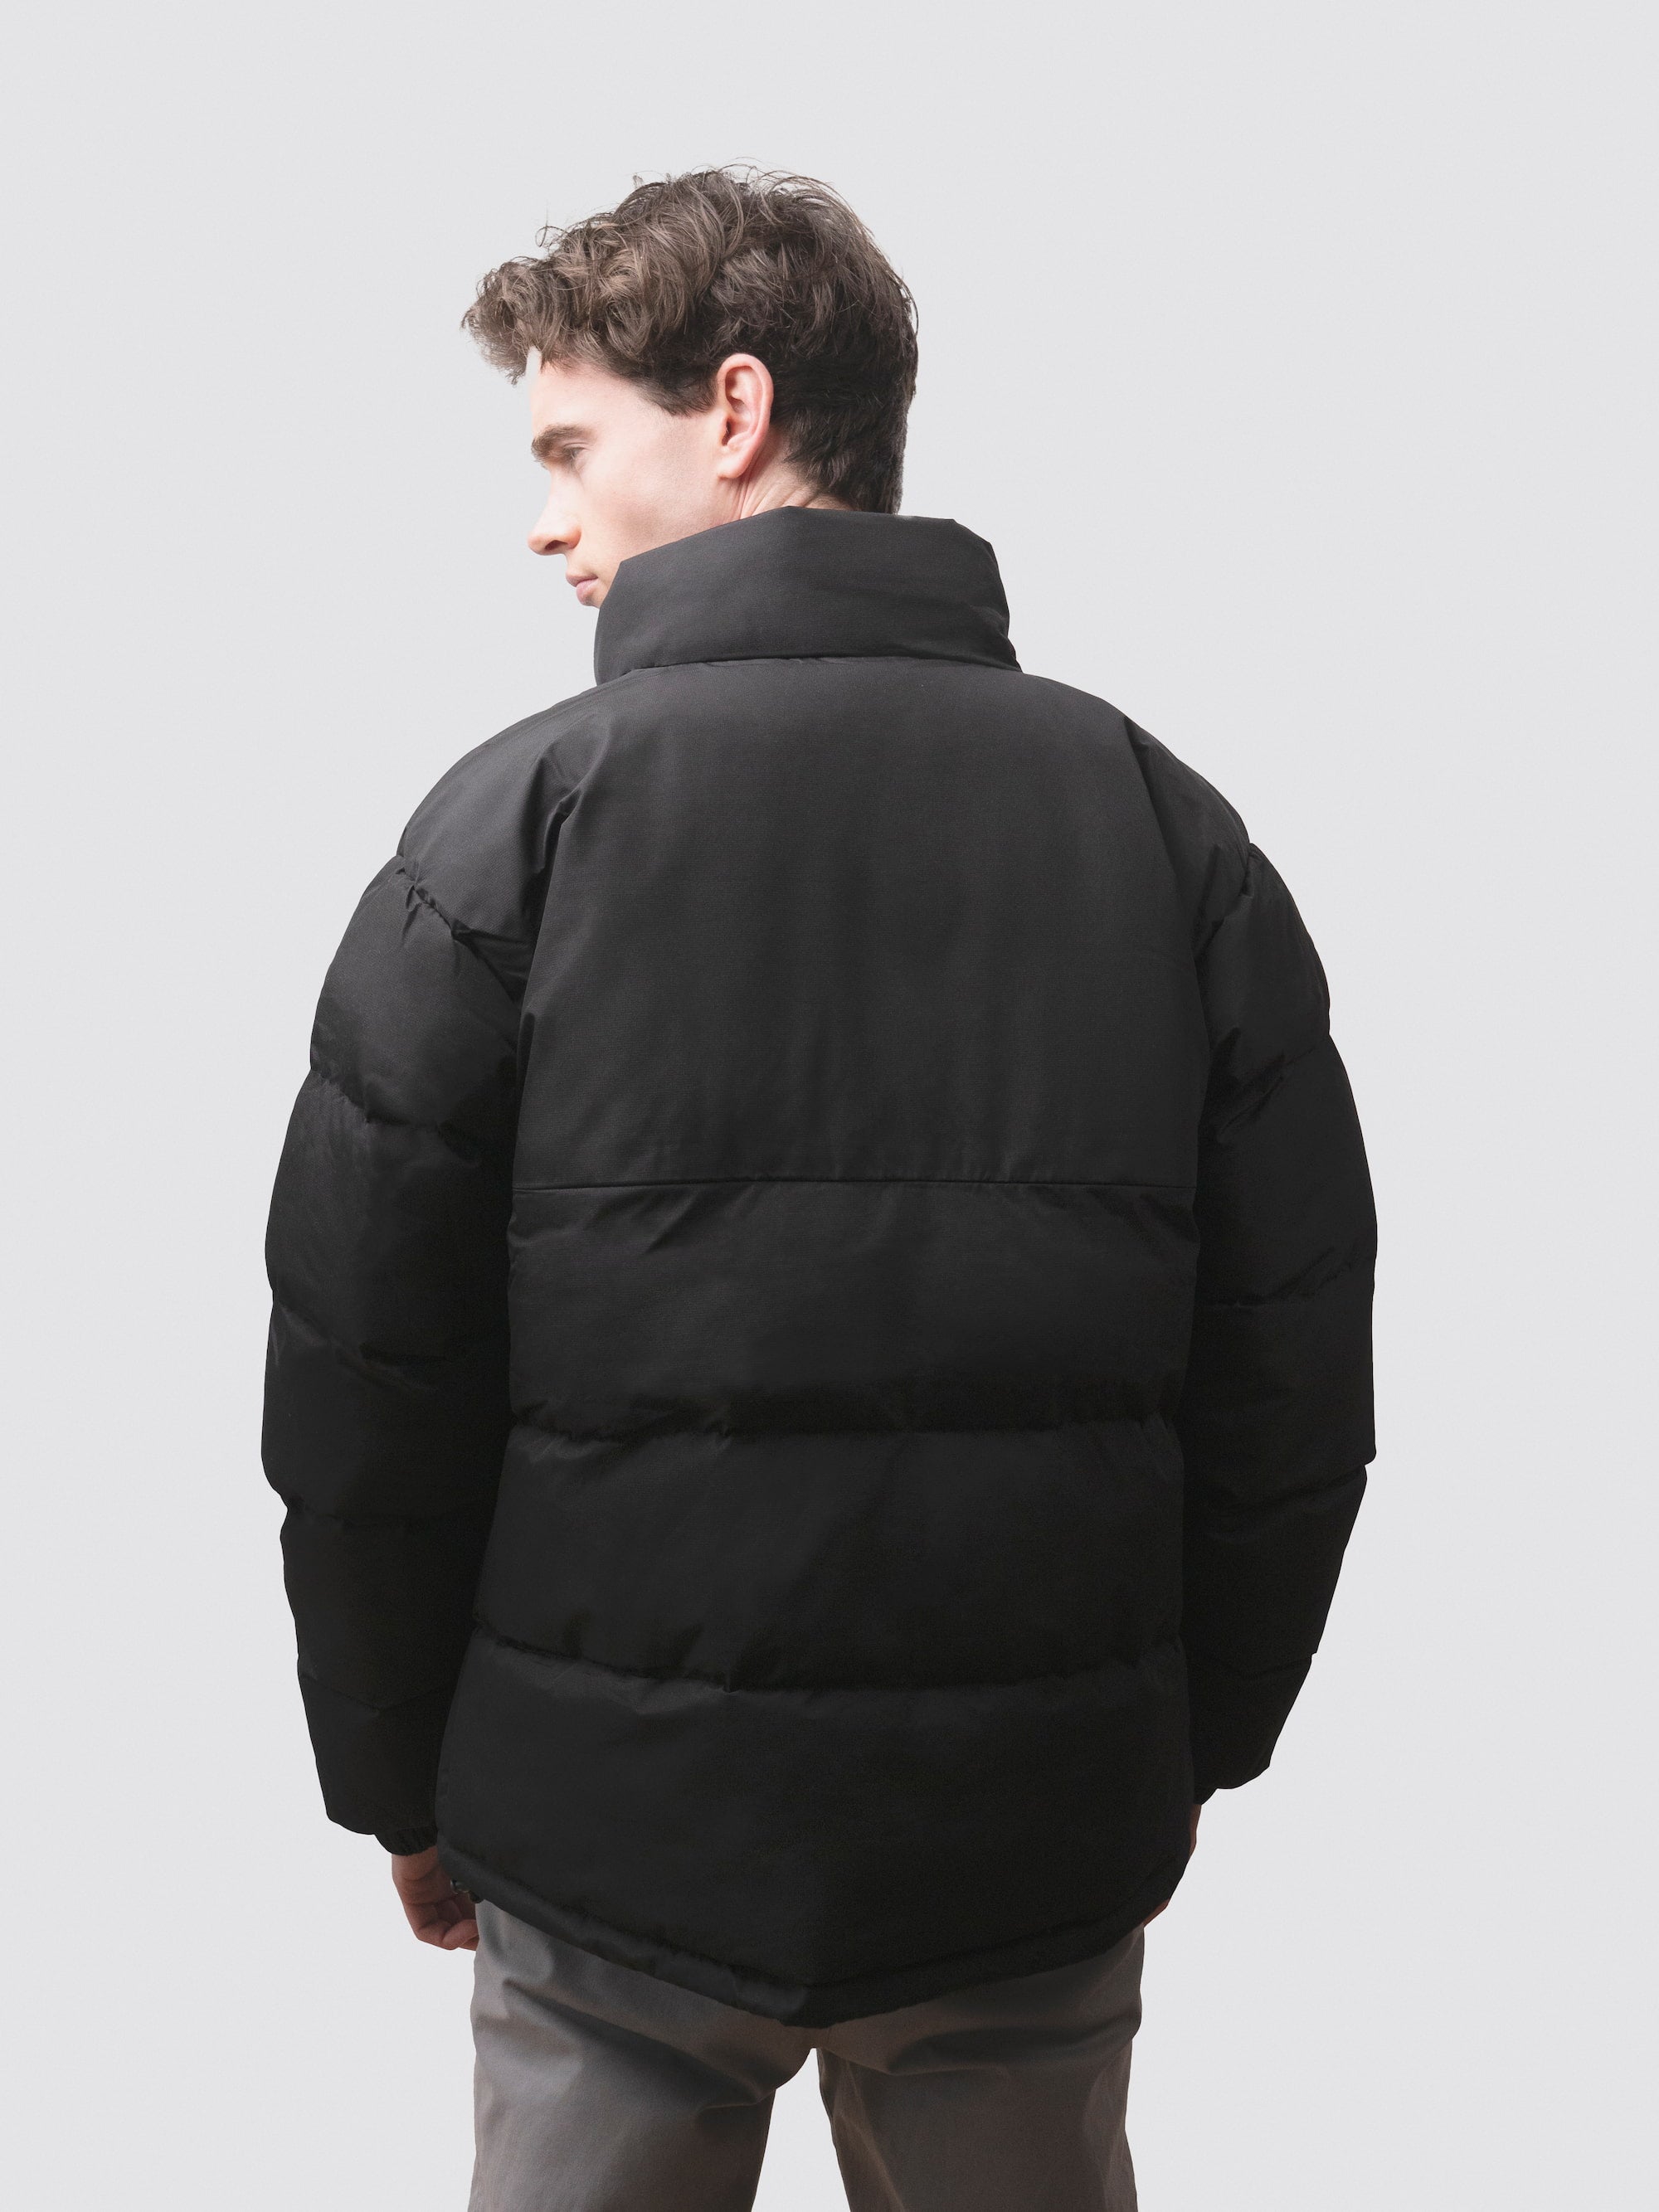 The back of a black, men’s puffer jacket from redbird